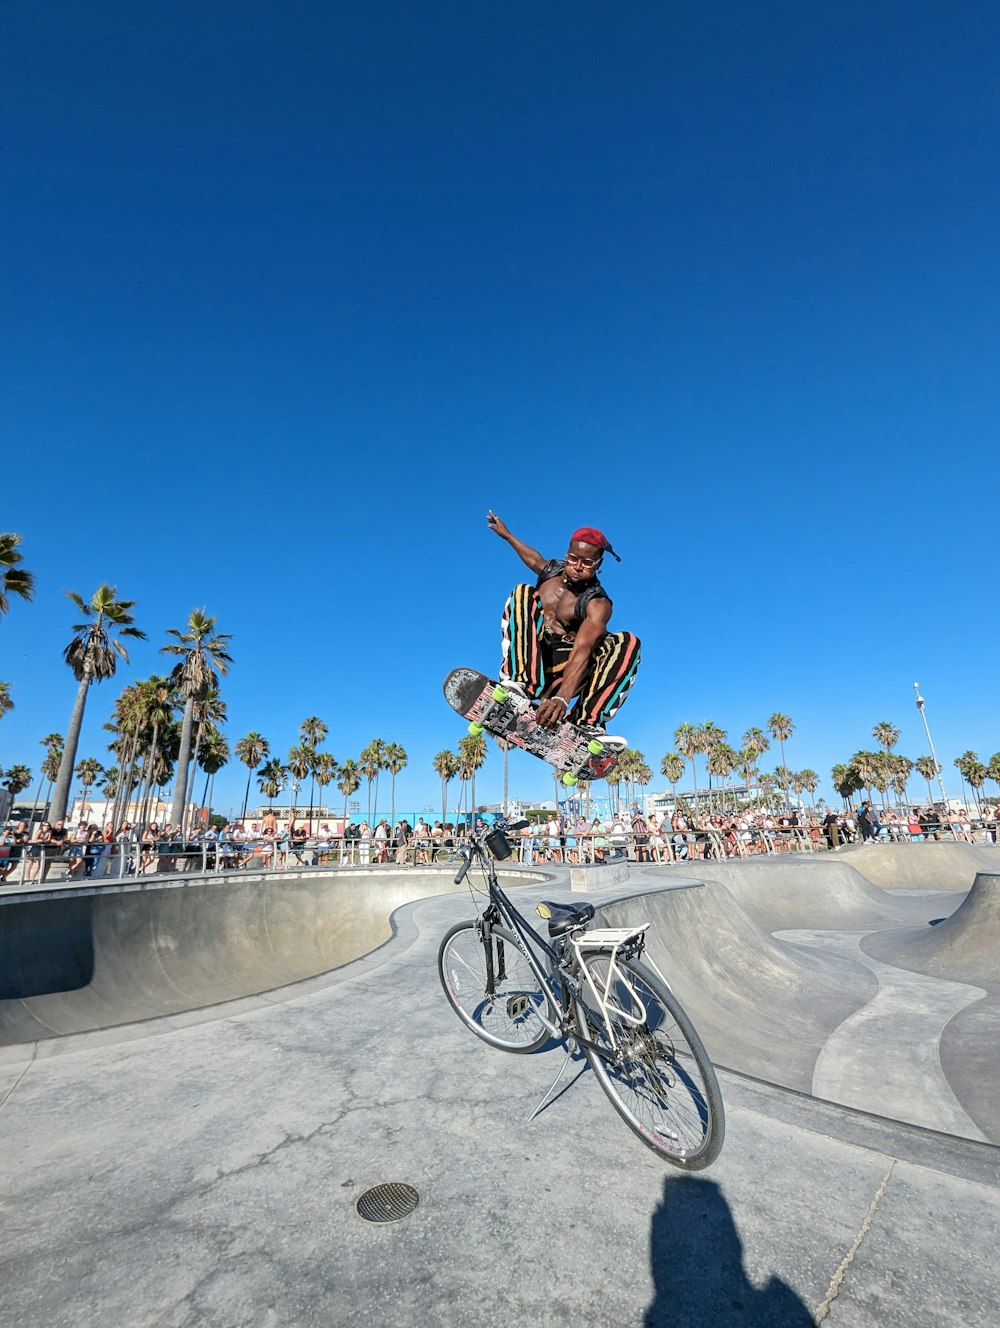 Venice Beach Skatepark Pictures | Download Free Images on Unsplash